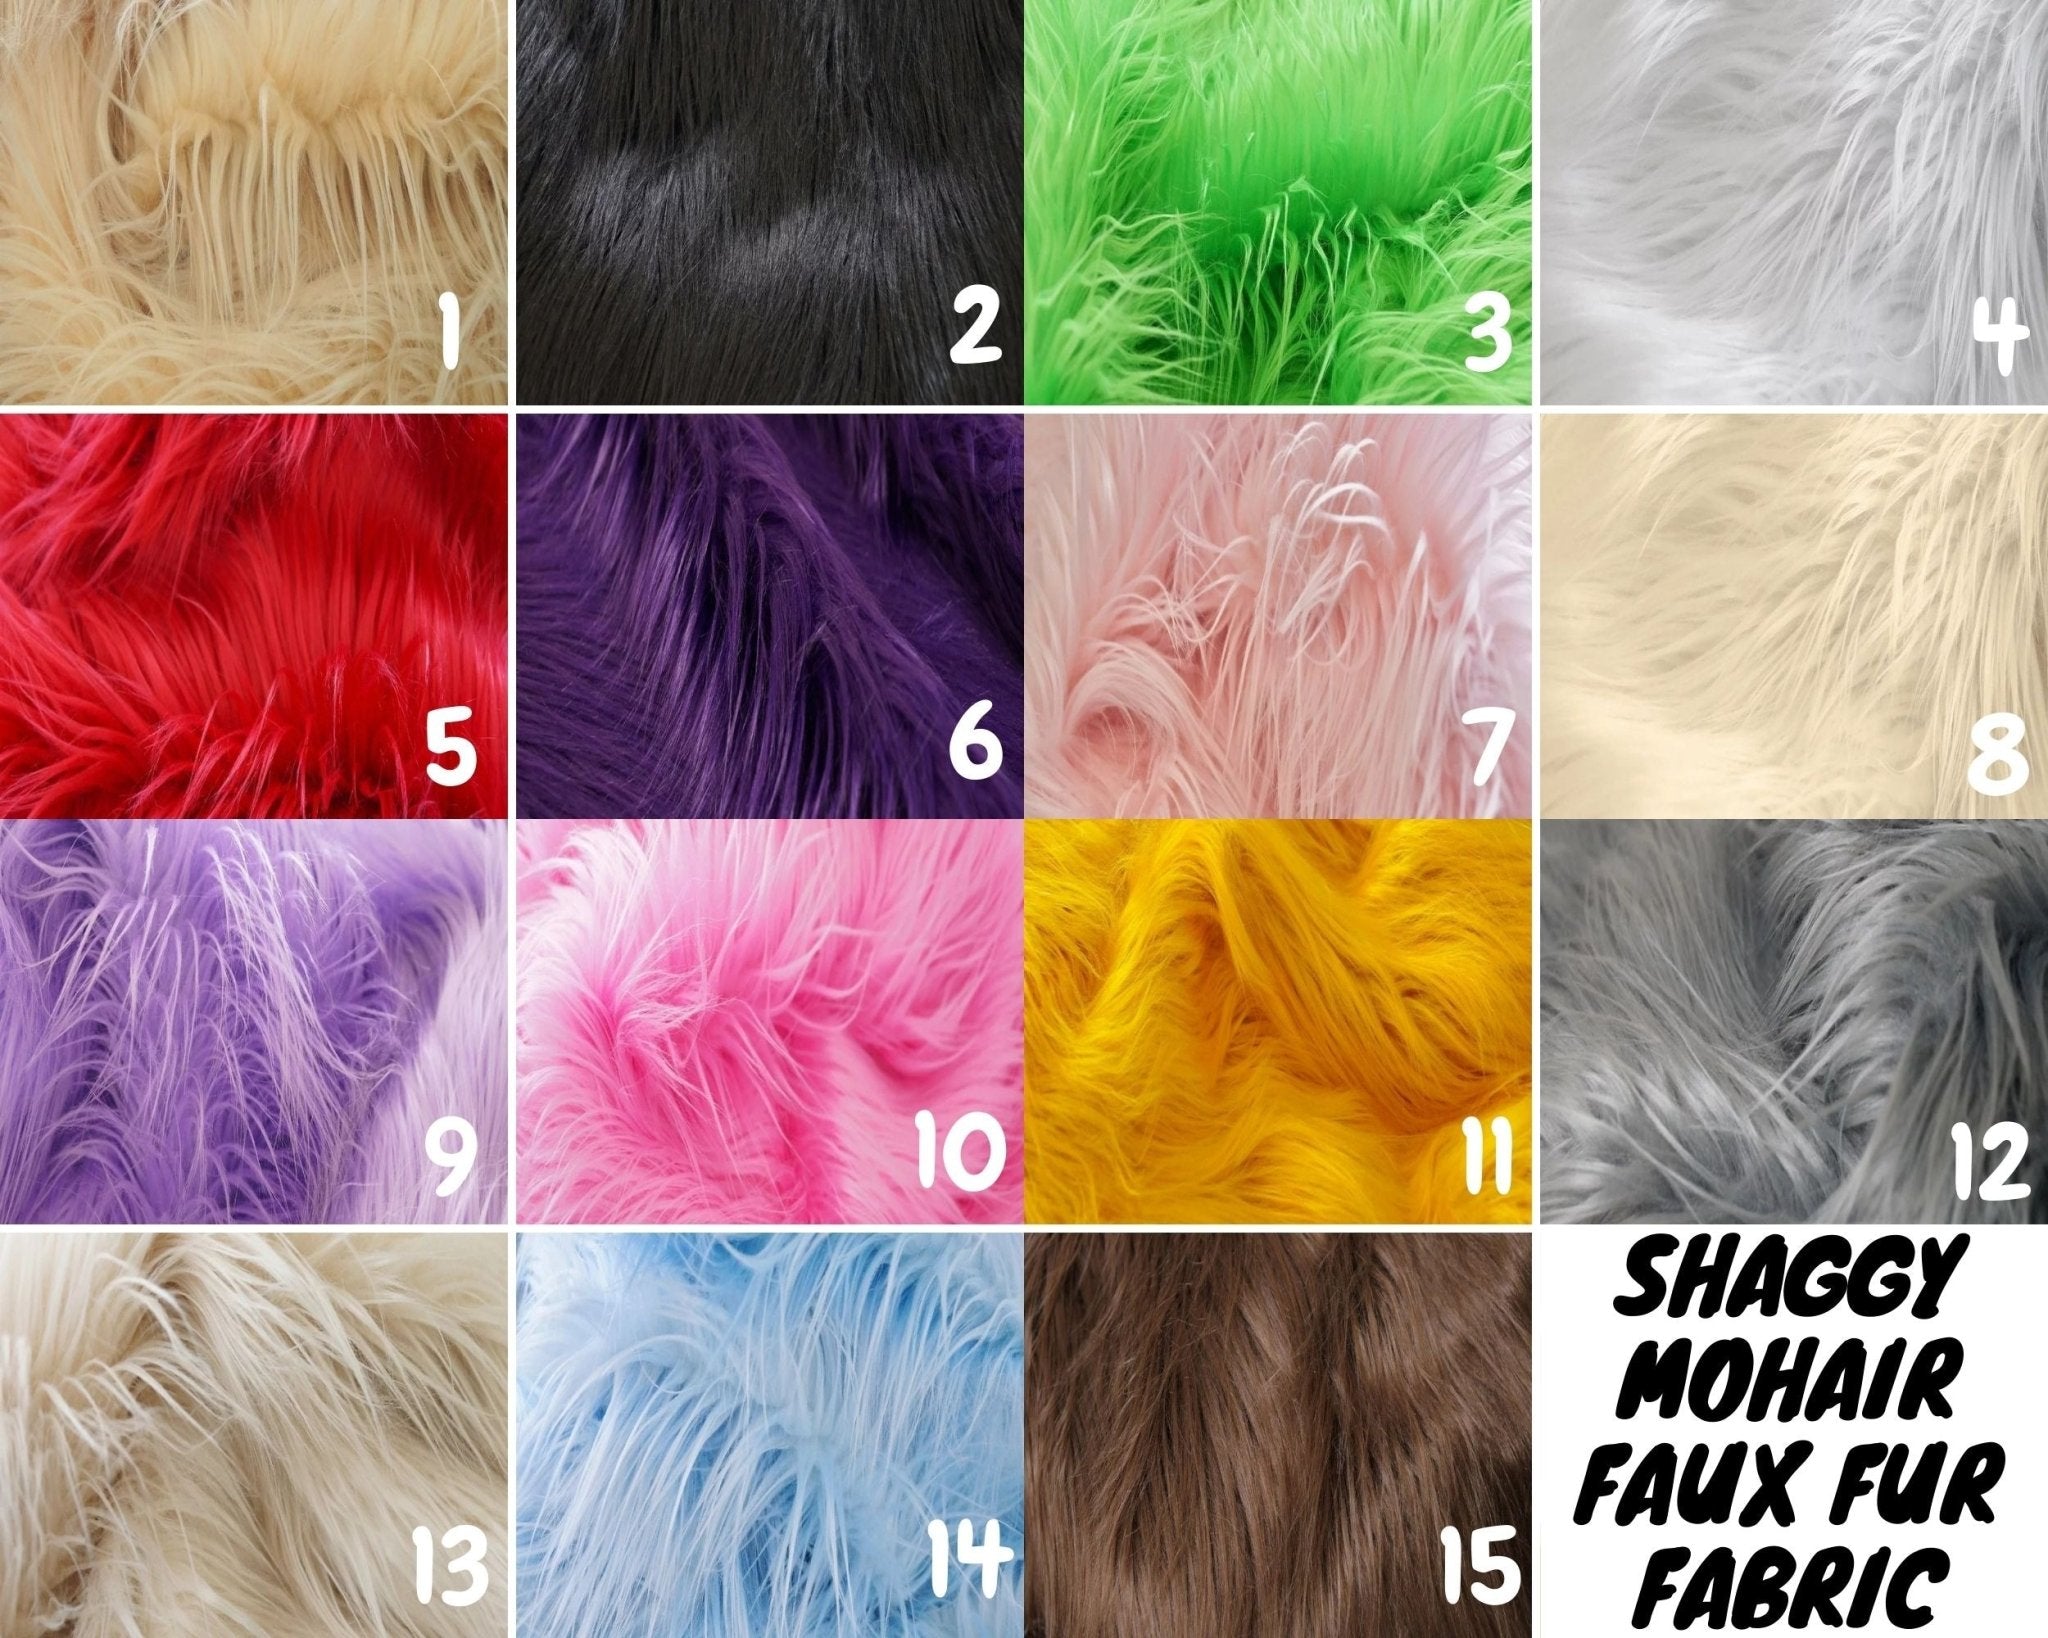 Shaggy Mohair Faux Fur Fabric/ 4 Inches Long PileICE FABRICSICE FABRICSBlack1/2 Yard (60 inches Wide)Shaggy Mohair Faux Fur Fabric/ 4 Inches Long Pile ICE FABRICS